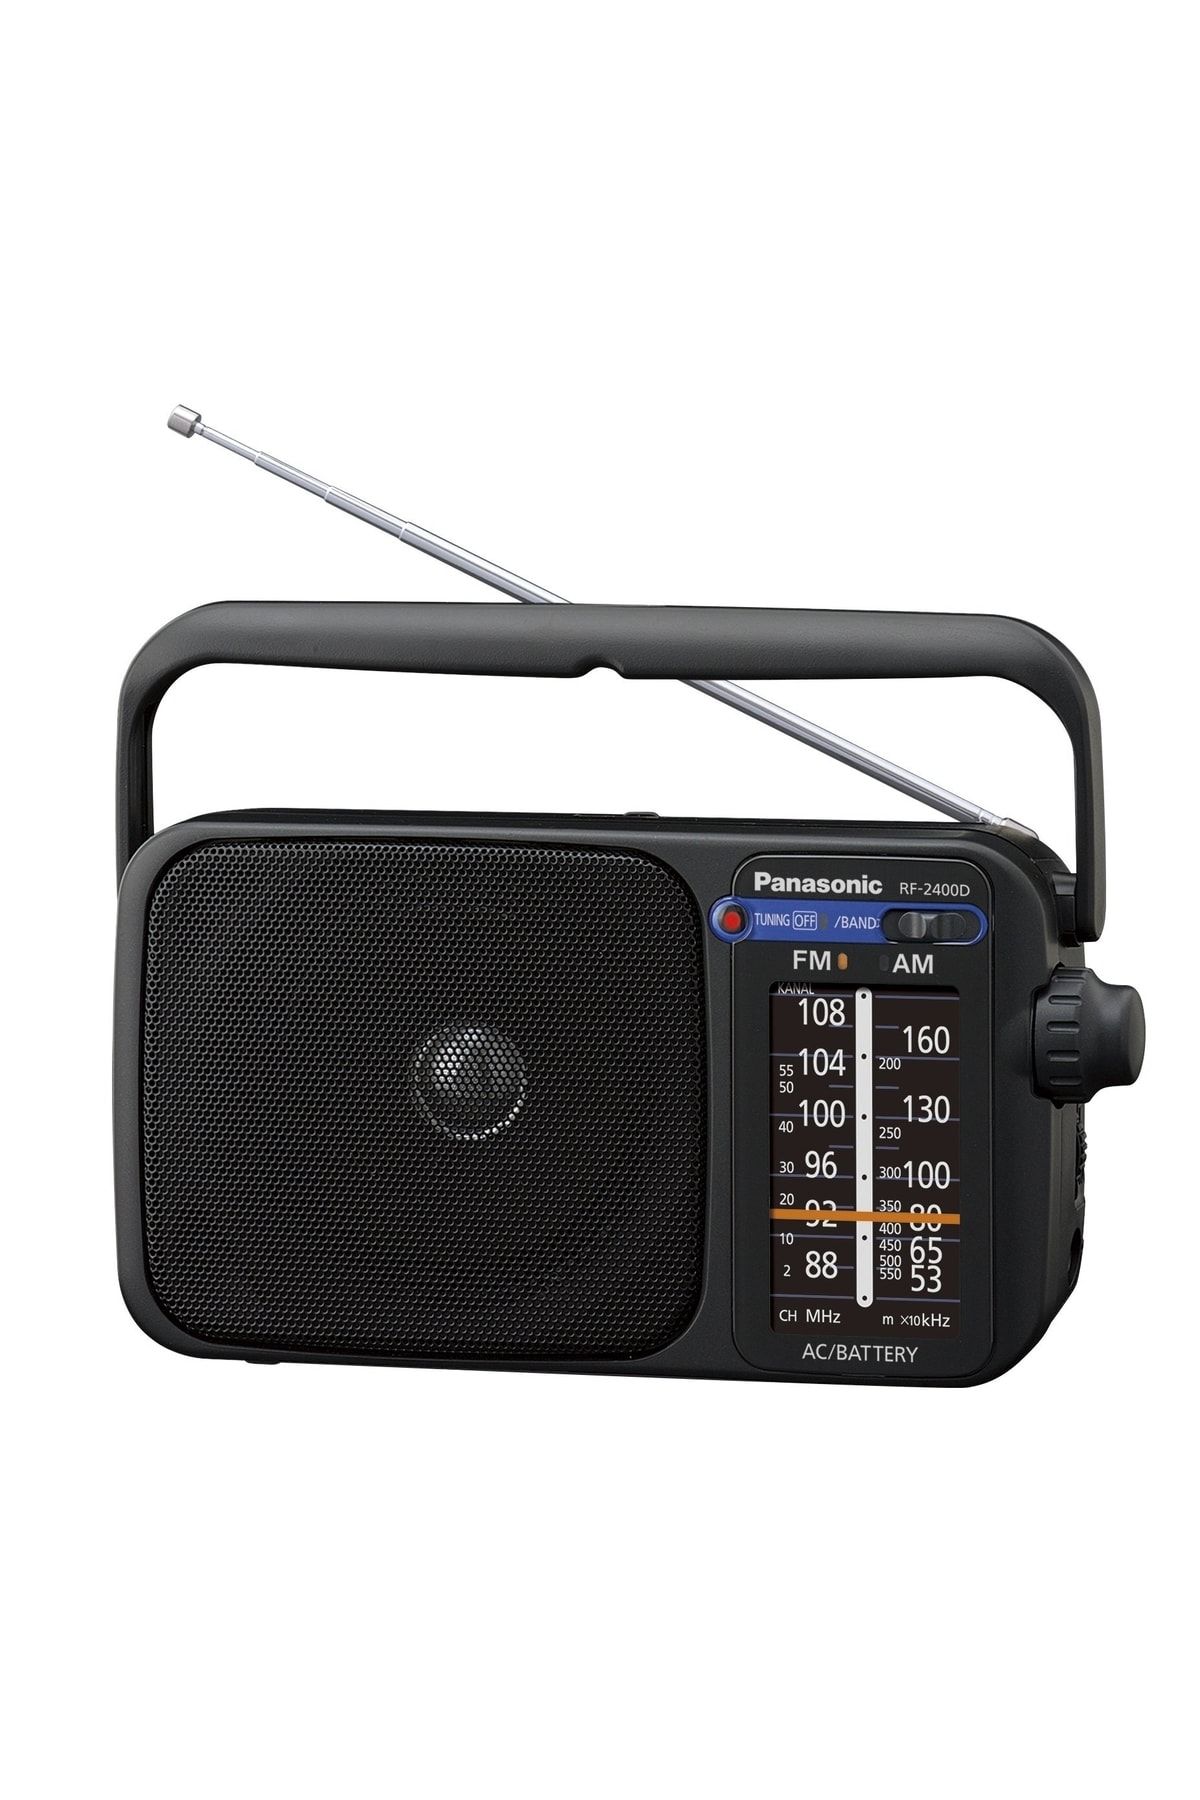 Panasonic Rf-2400d Am/fm Radyo